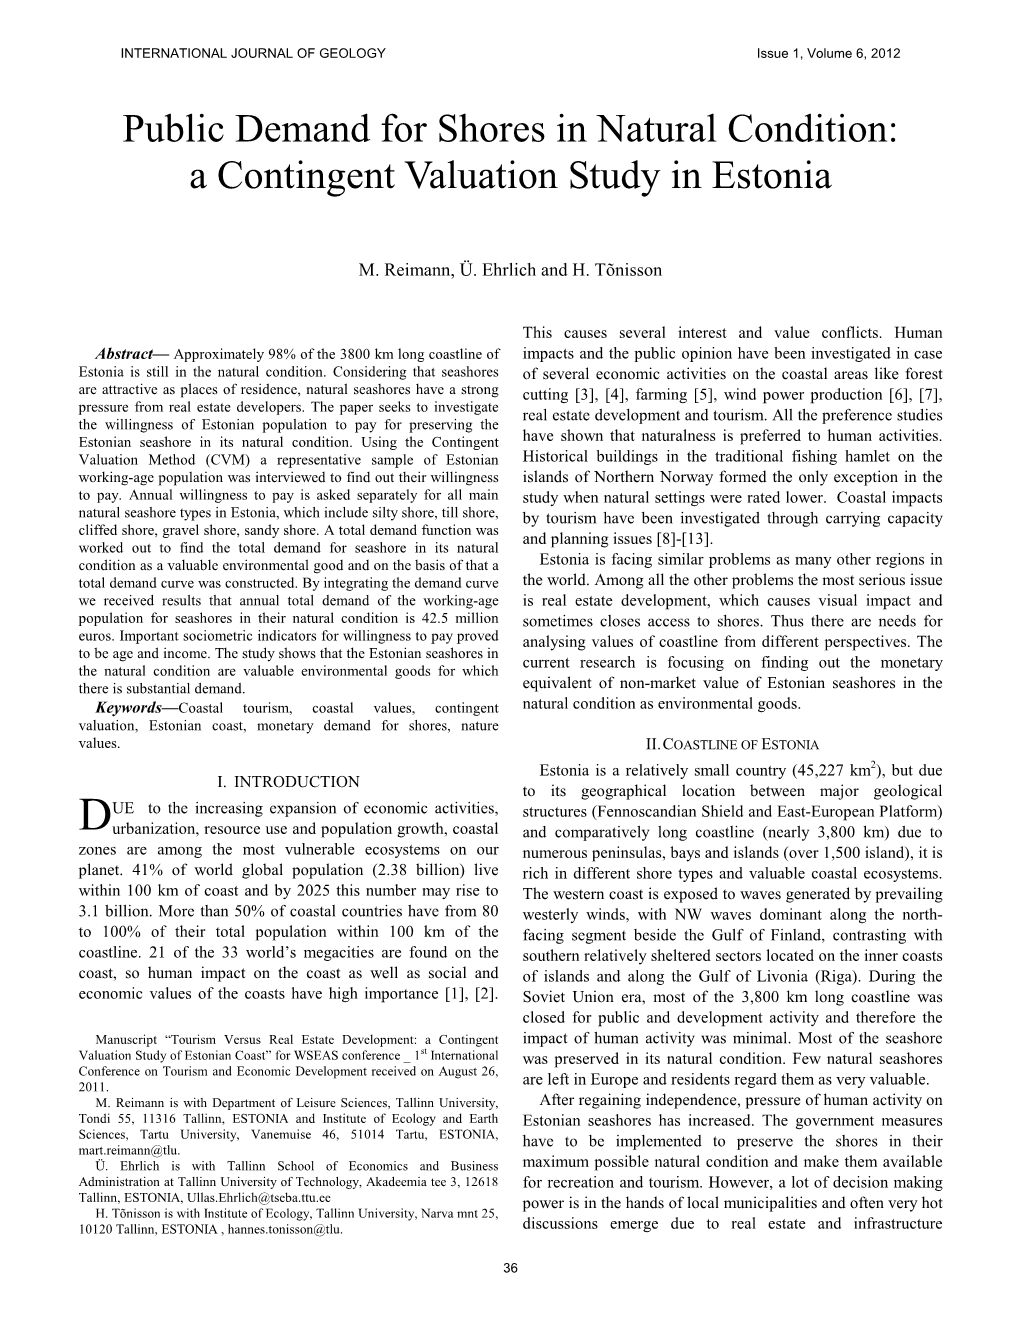 A Contingent Valuation Study in Estonia